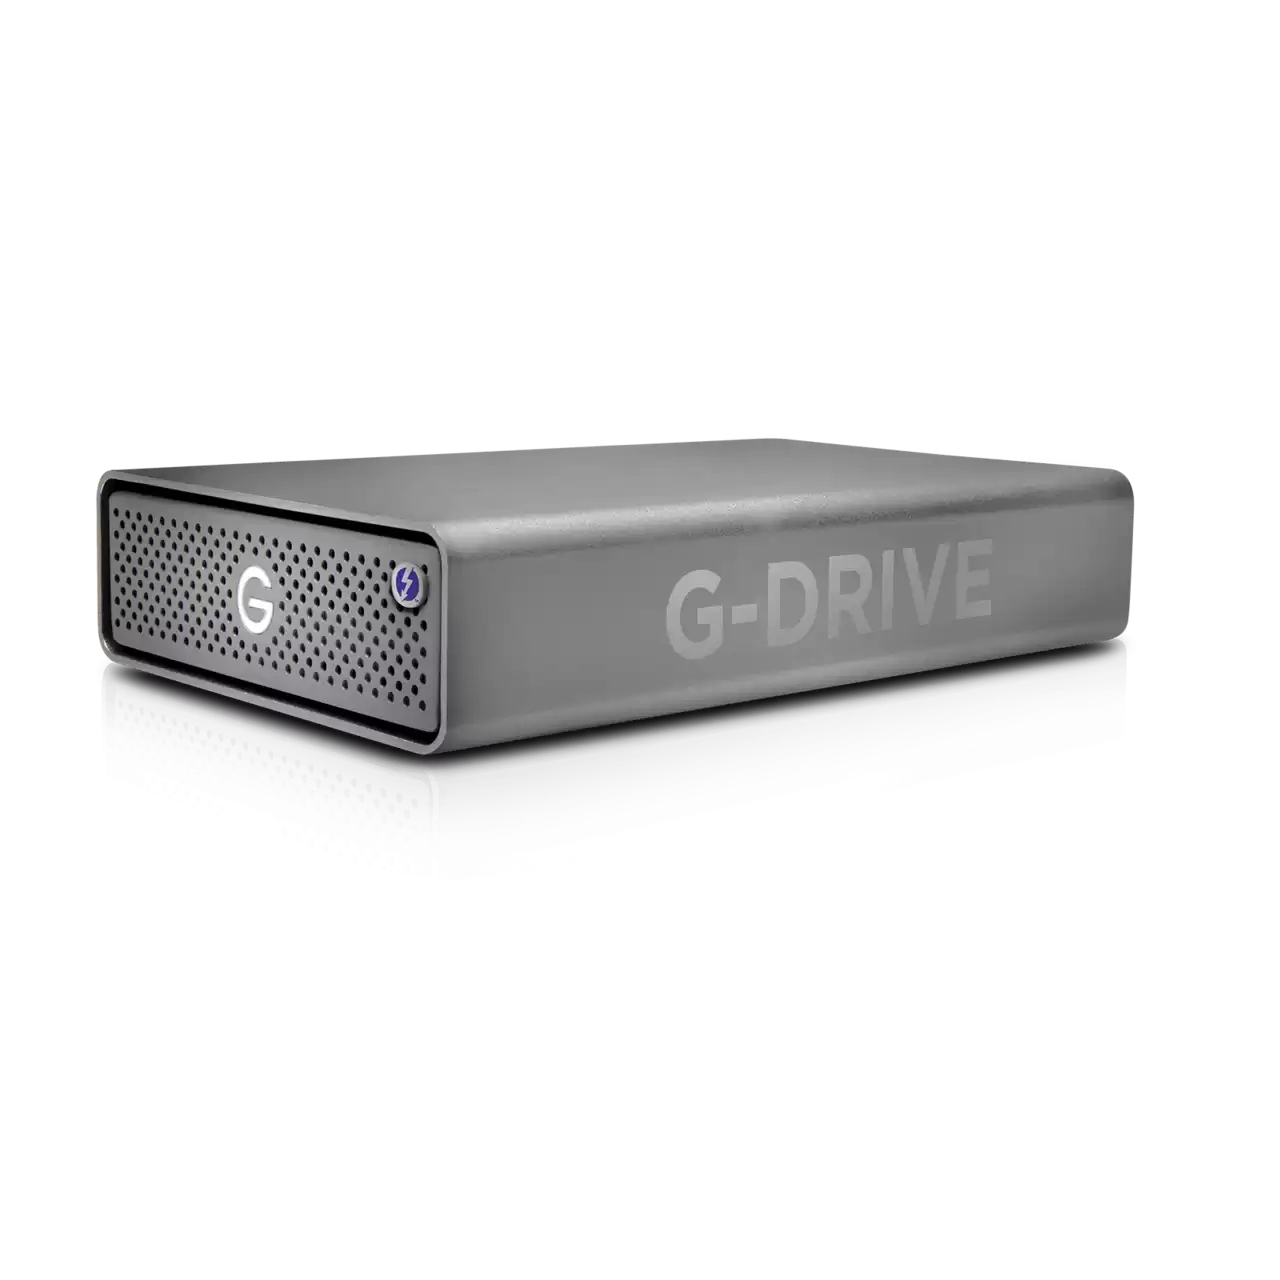  Professional G-DRIVE PRO 18TB 3.5inch Thunderbolt 3 7200RPM USB-C 5Gbps Enterprise-Class Desktop Drive - Space Grey